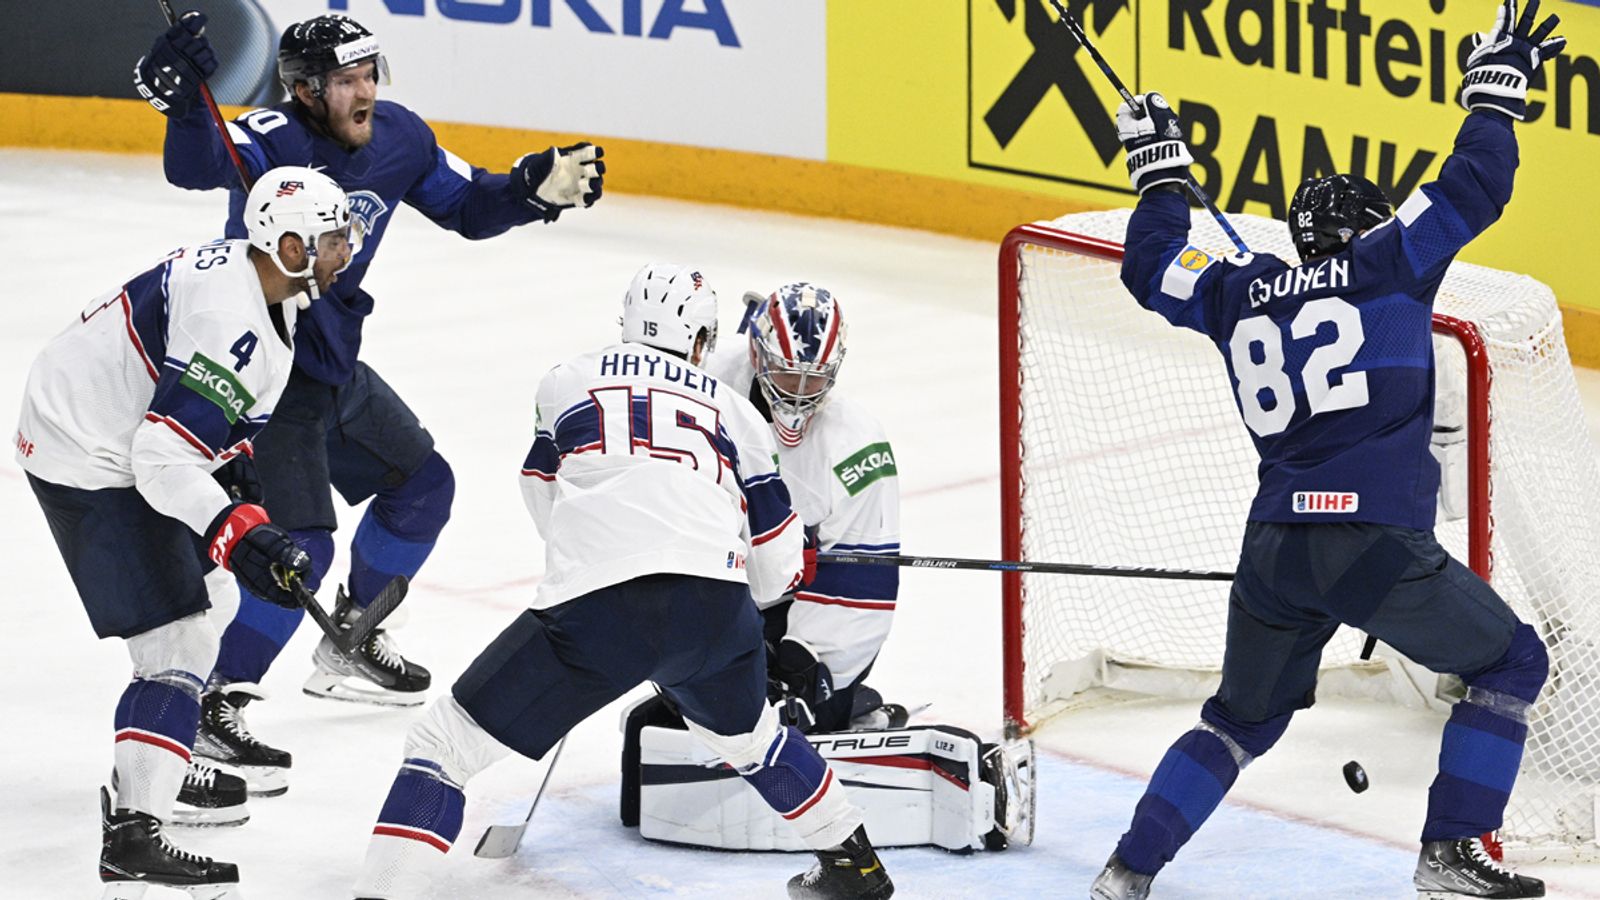 Eishockey Finnland and Kanada erneut im WM-Finale Eishockey News Sky Sport